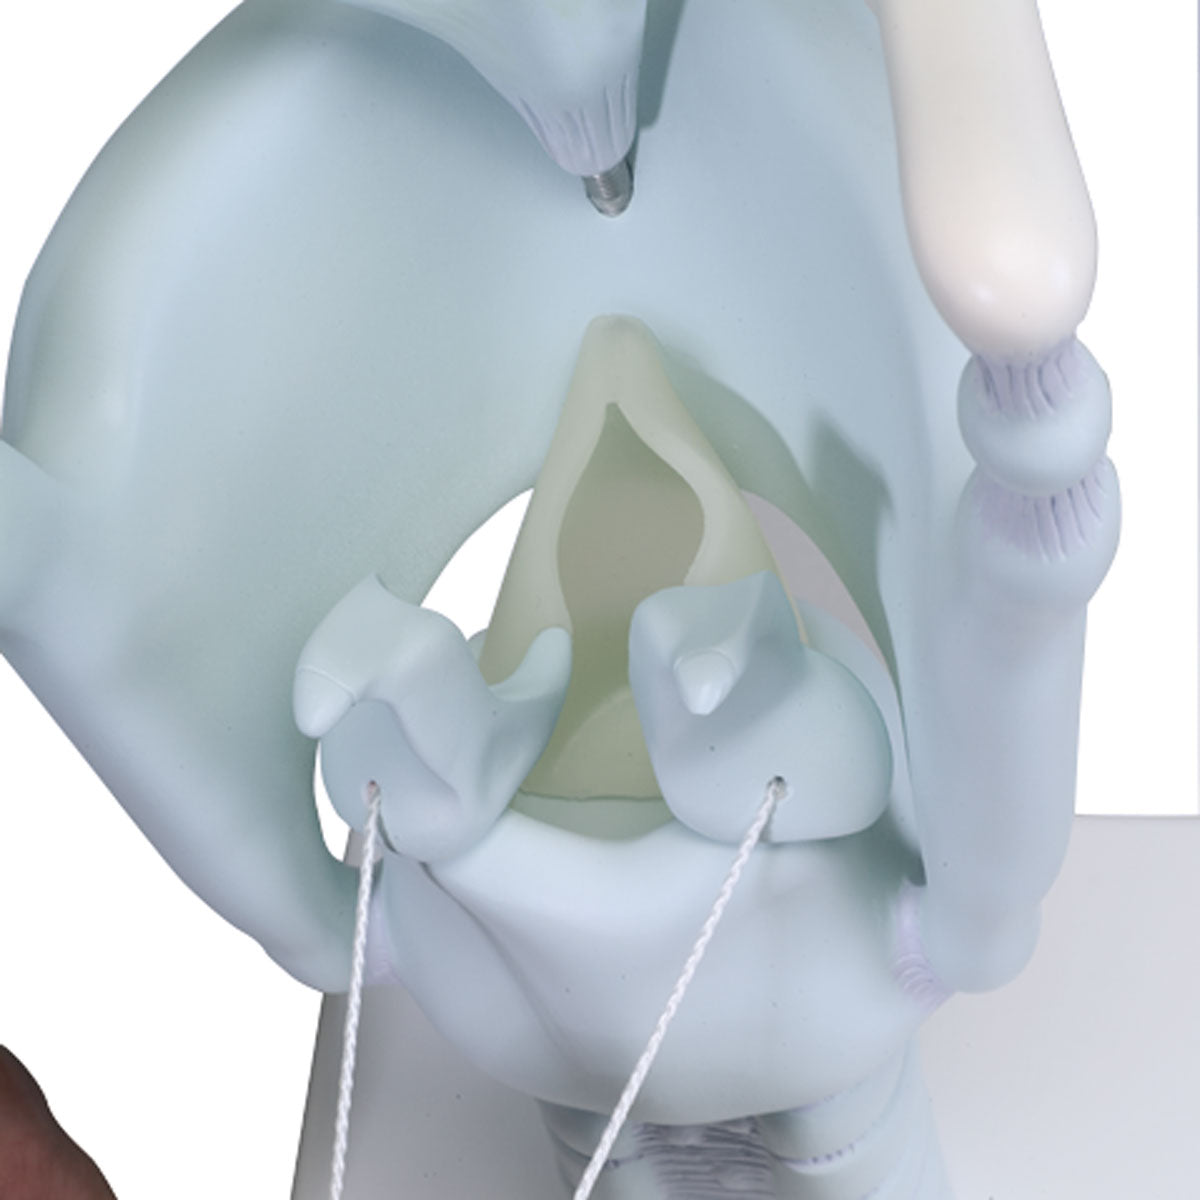 VC219 Functional Larynx Model, 3 Times Full-Size